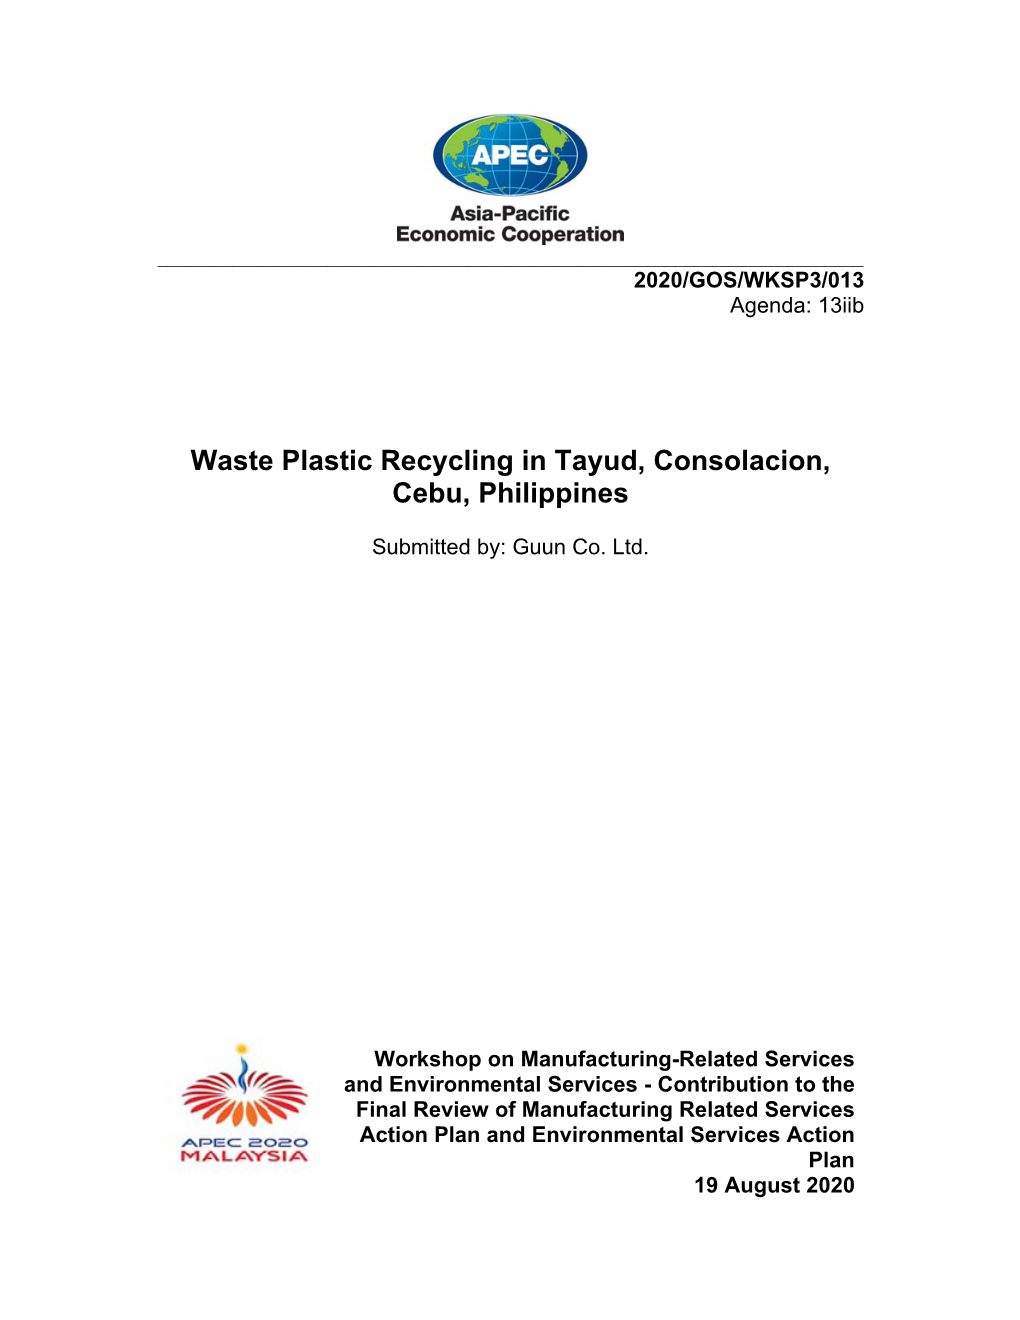 Waste Plastic Recycling in Tayud, Consolacion, Cebu, Philippines